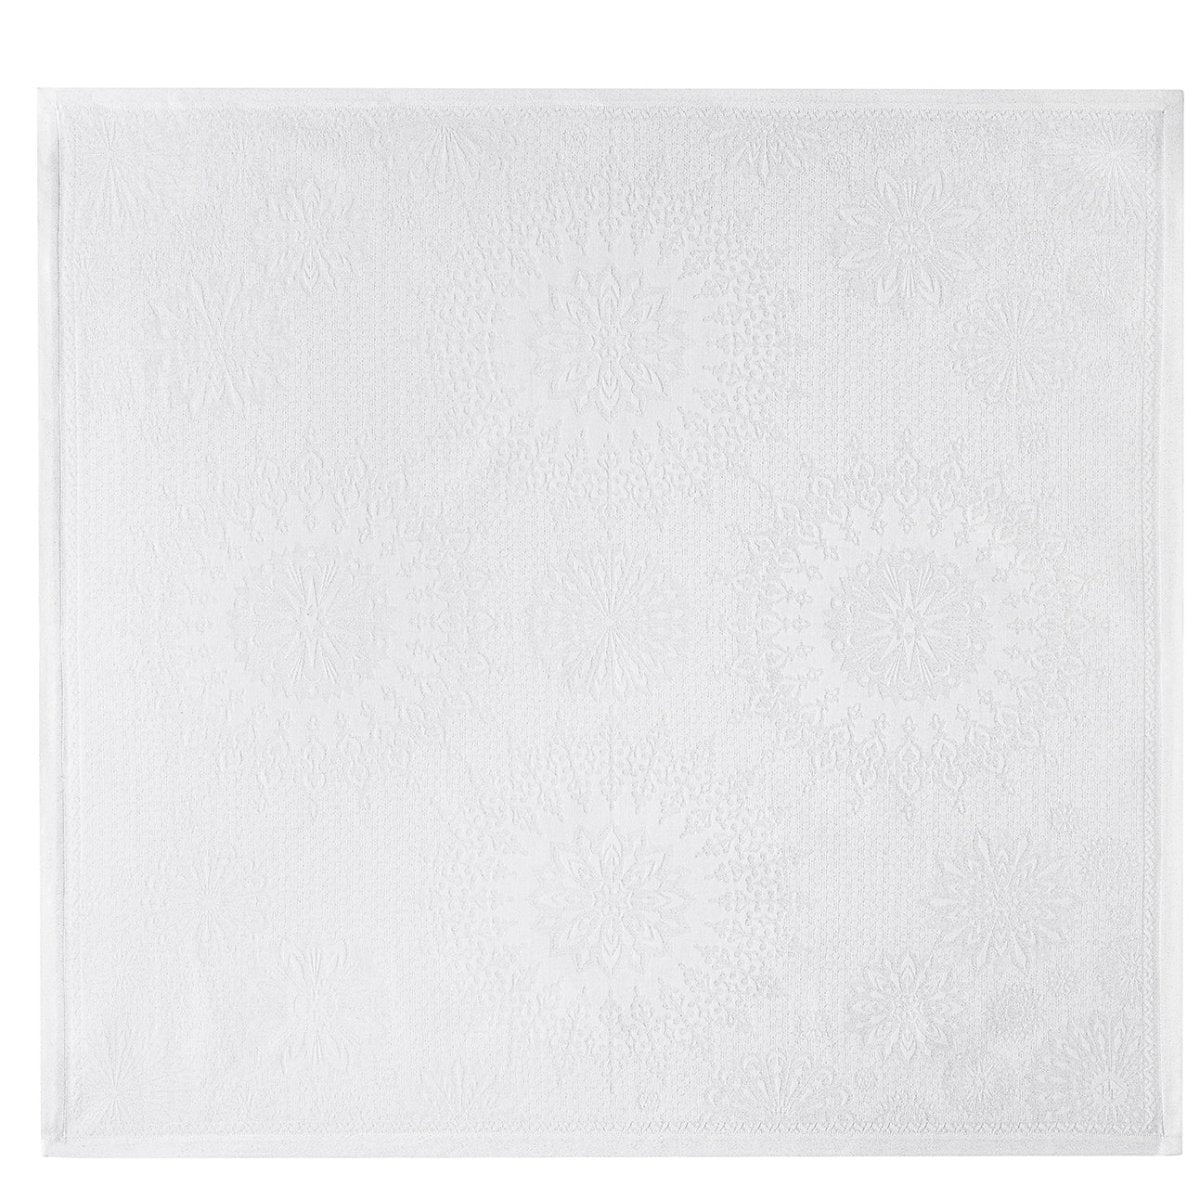 lumière d'étoiles diamant white napkin | Le Jacquard Francais - Cloth napkins on holiday table